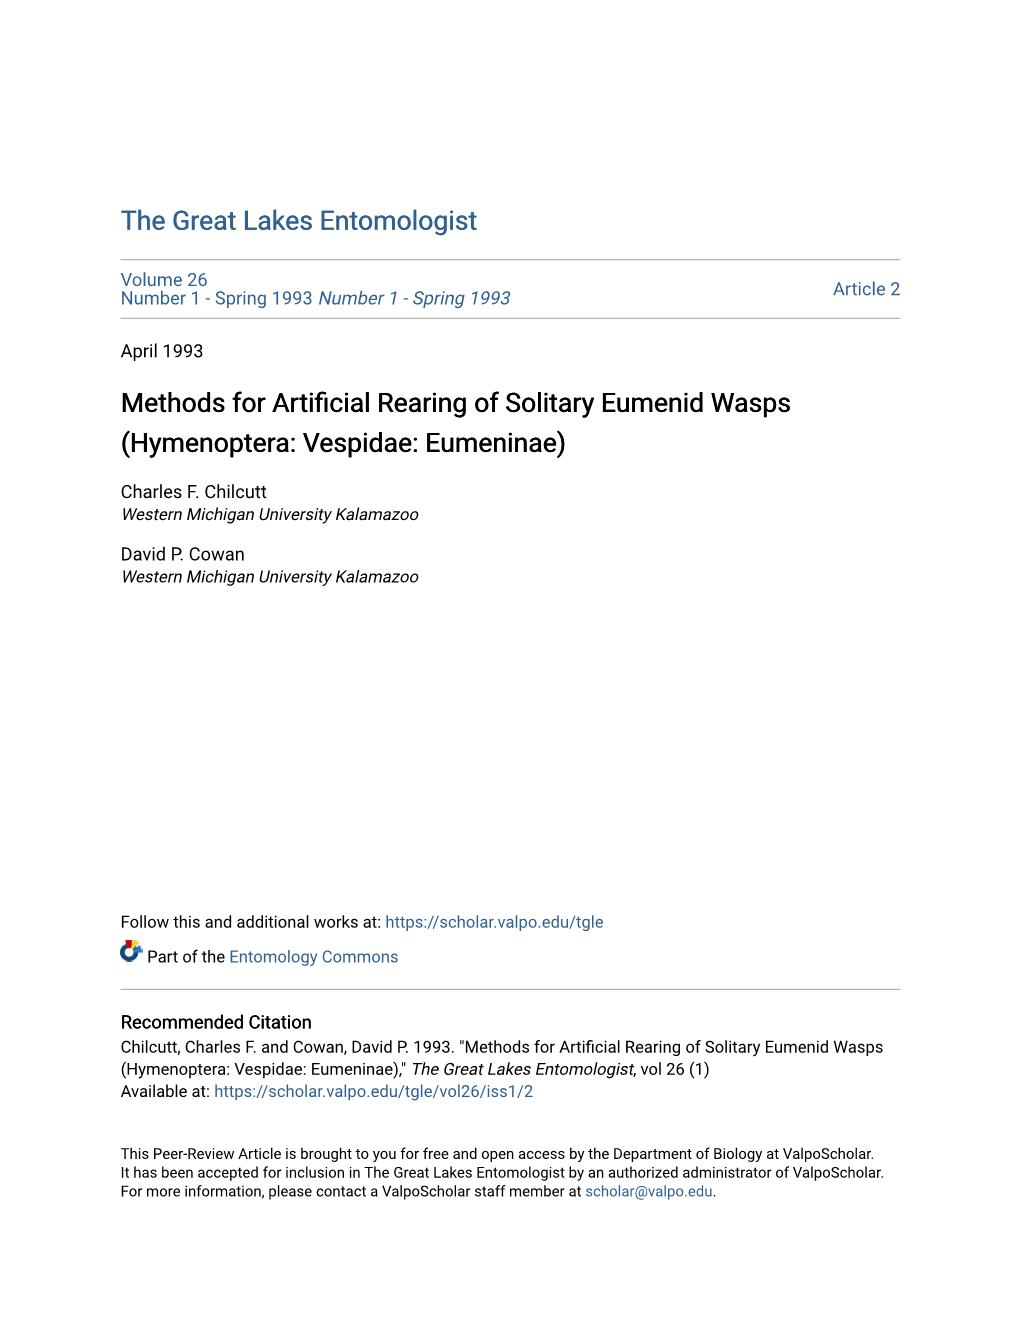 Methods for Artificial Rearing of Solitary Eumenid Wasps (Hymenoptera: Vespidae: Eumeninae)